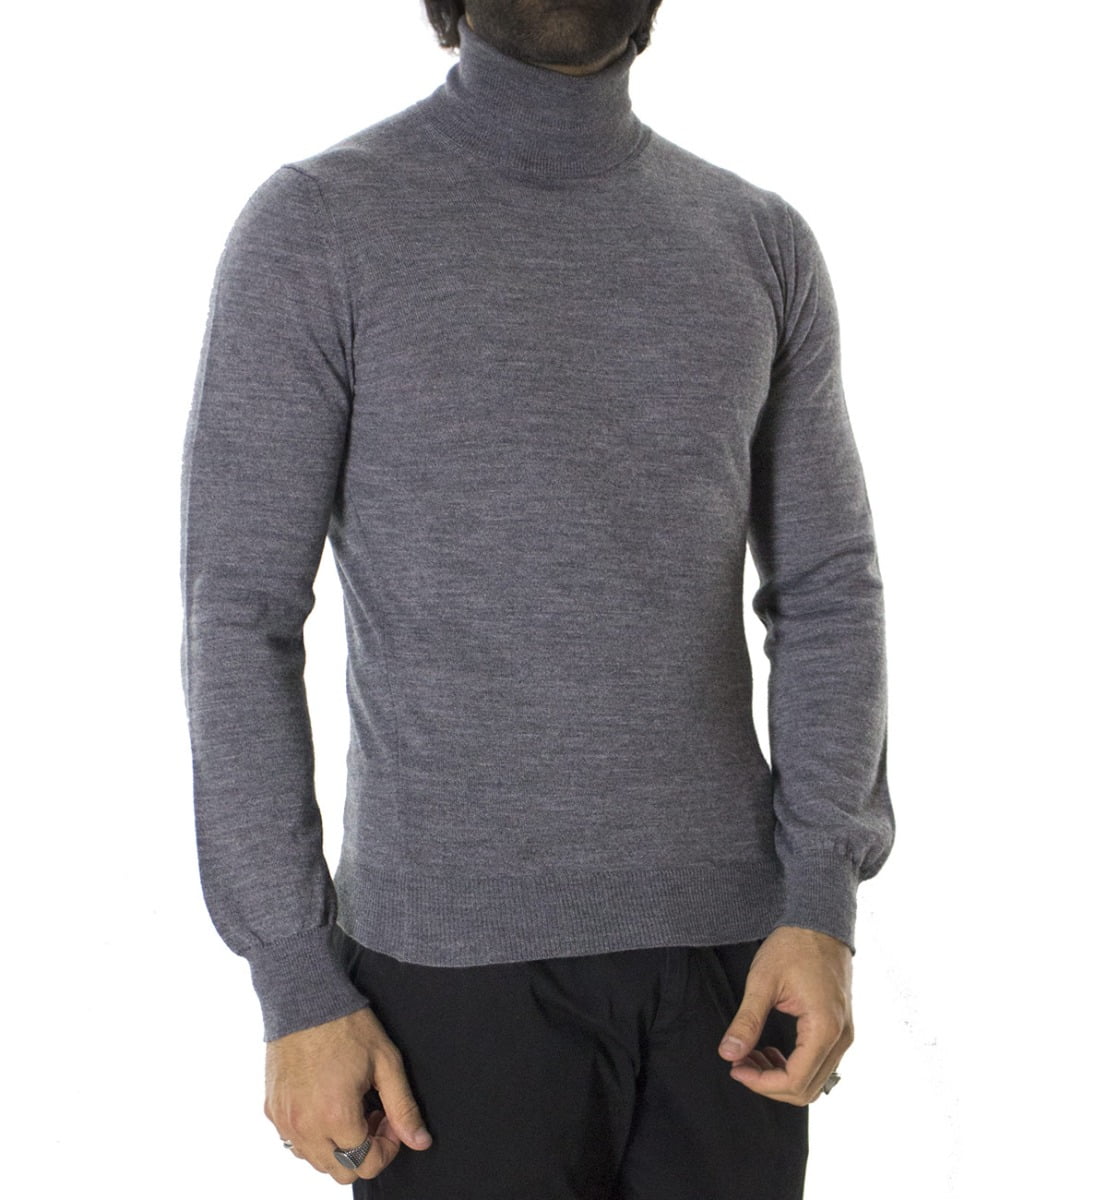 Dolcevita uomo grigio scuro in lana merinos slim fit made in italy casual